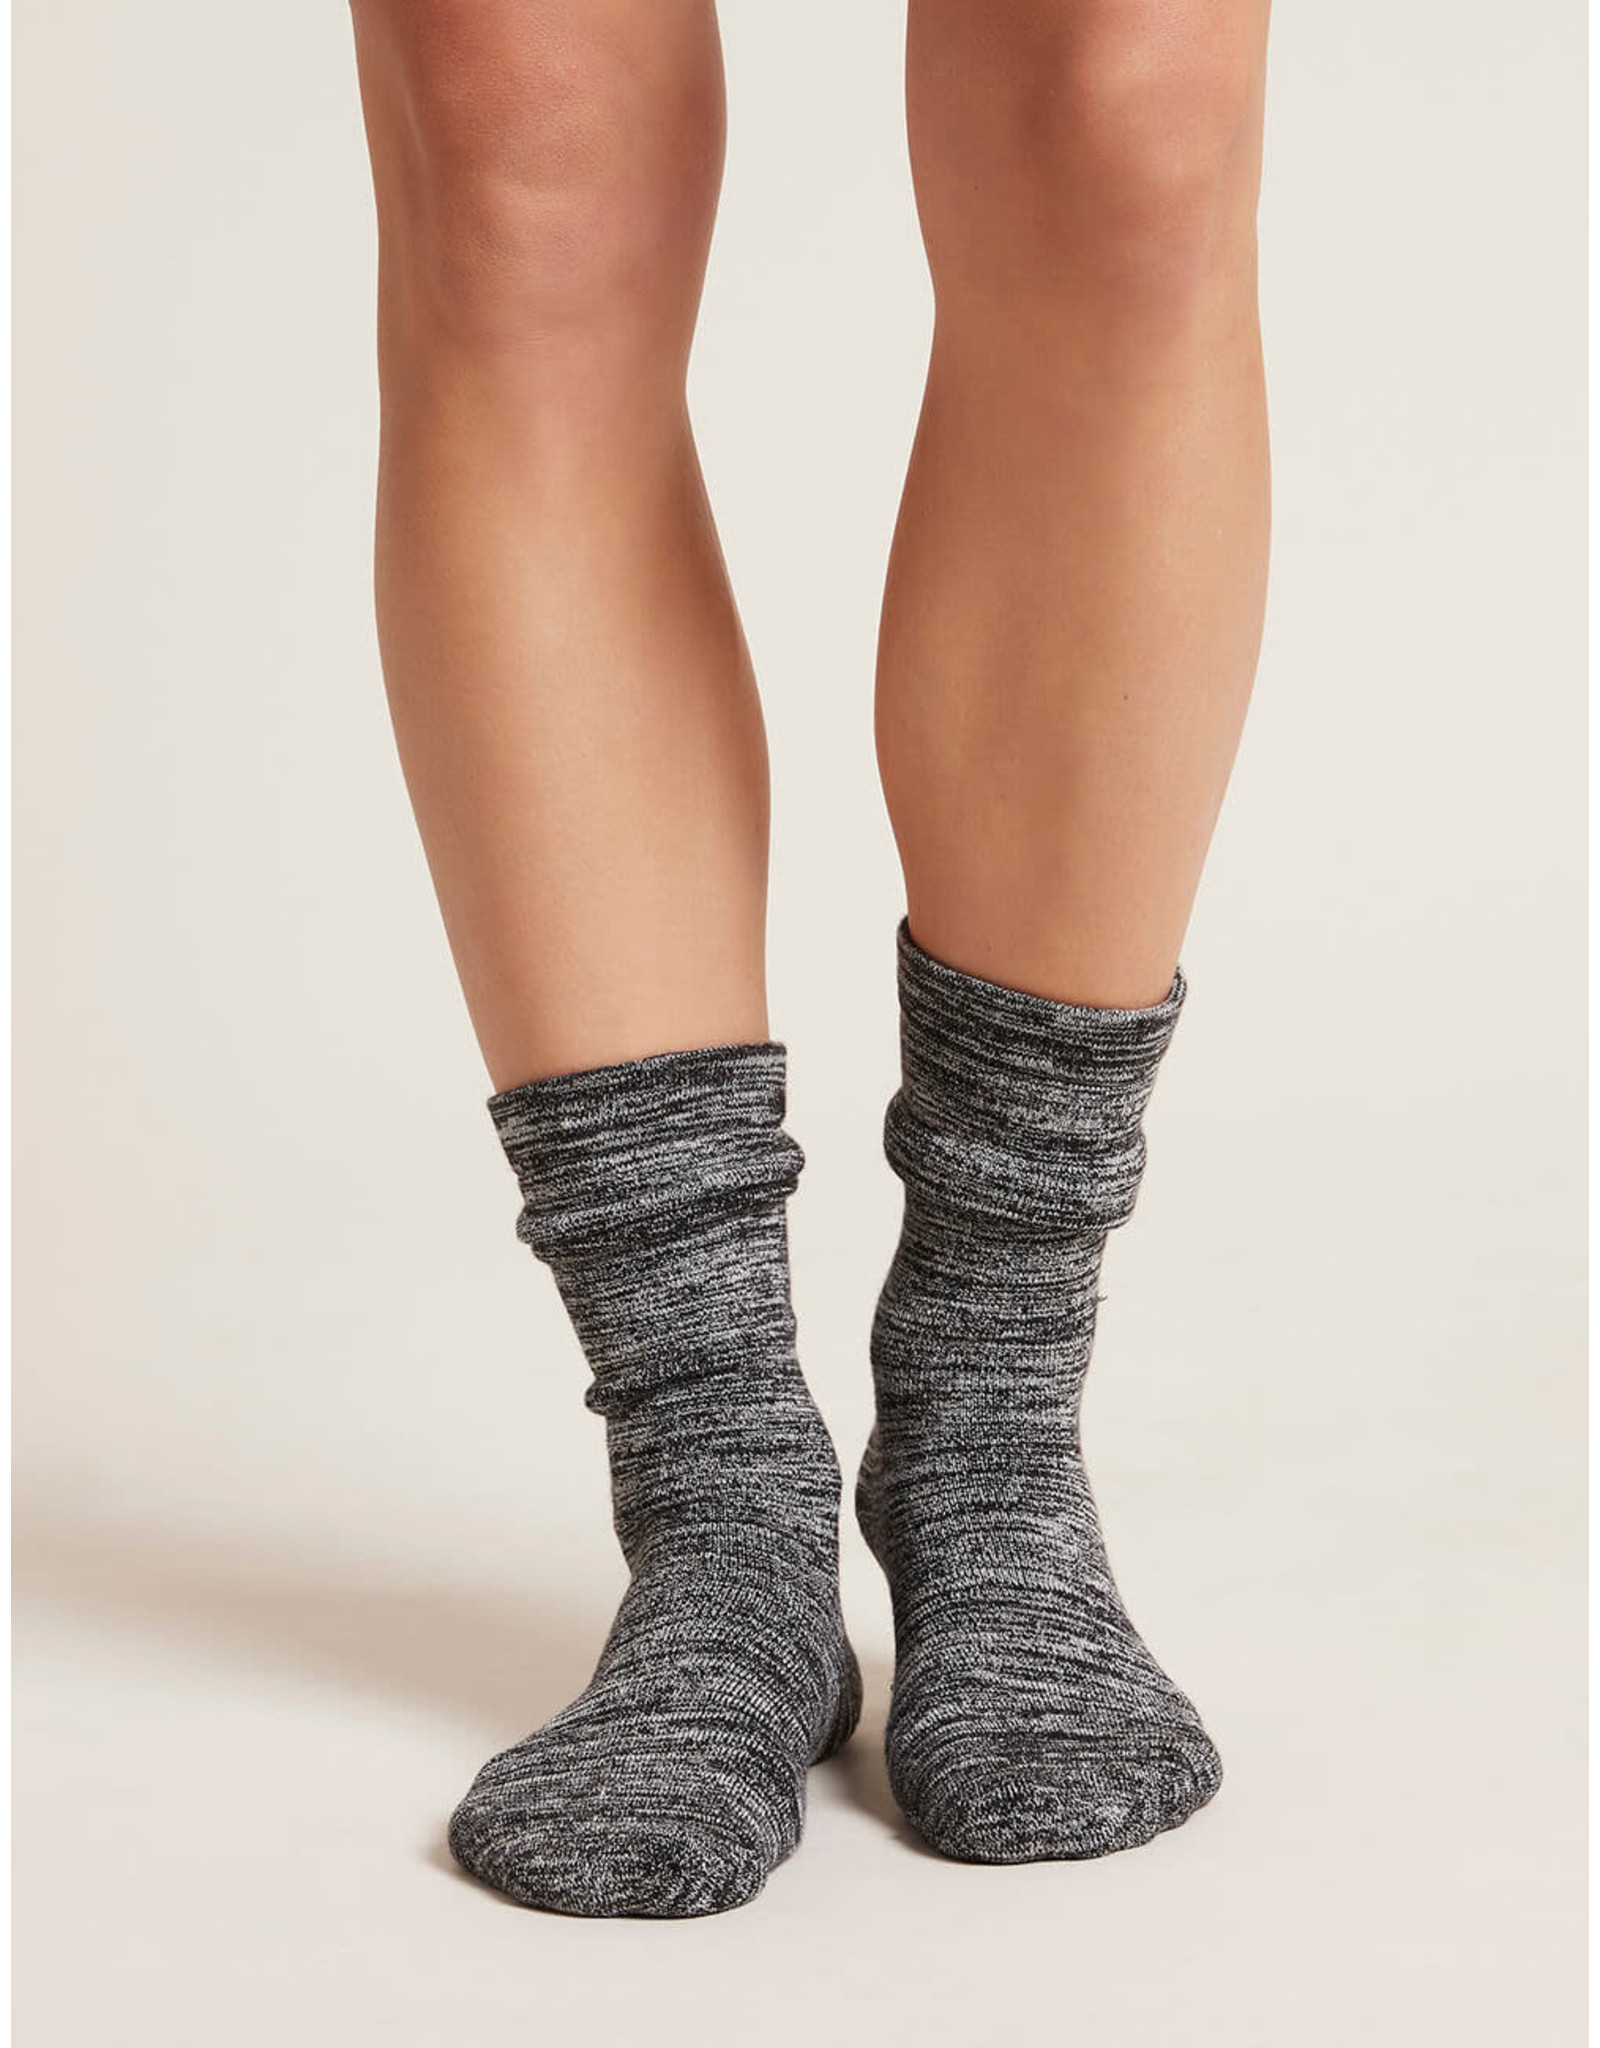 Boody Women's Chunky Bed Socks, Black/Natural